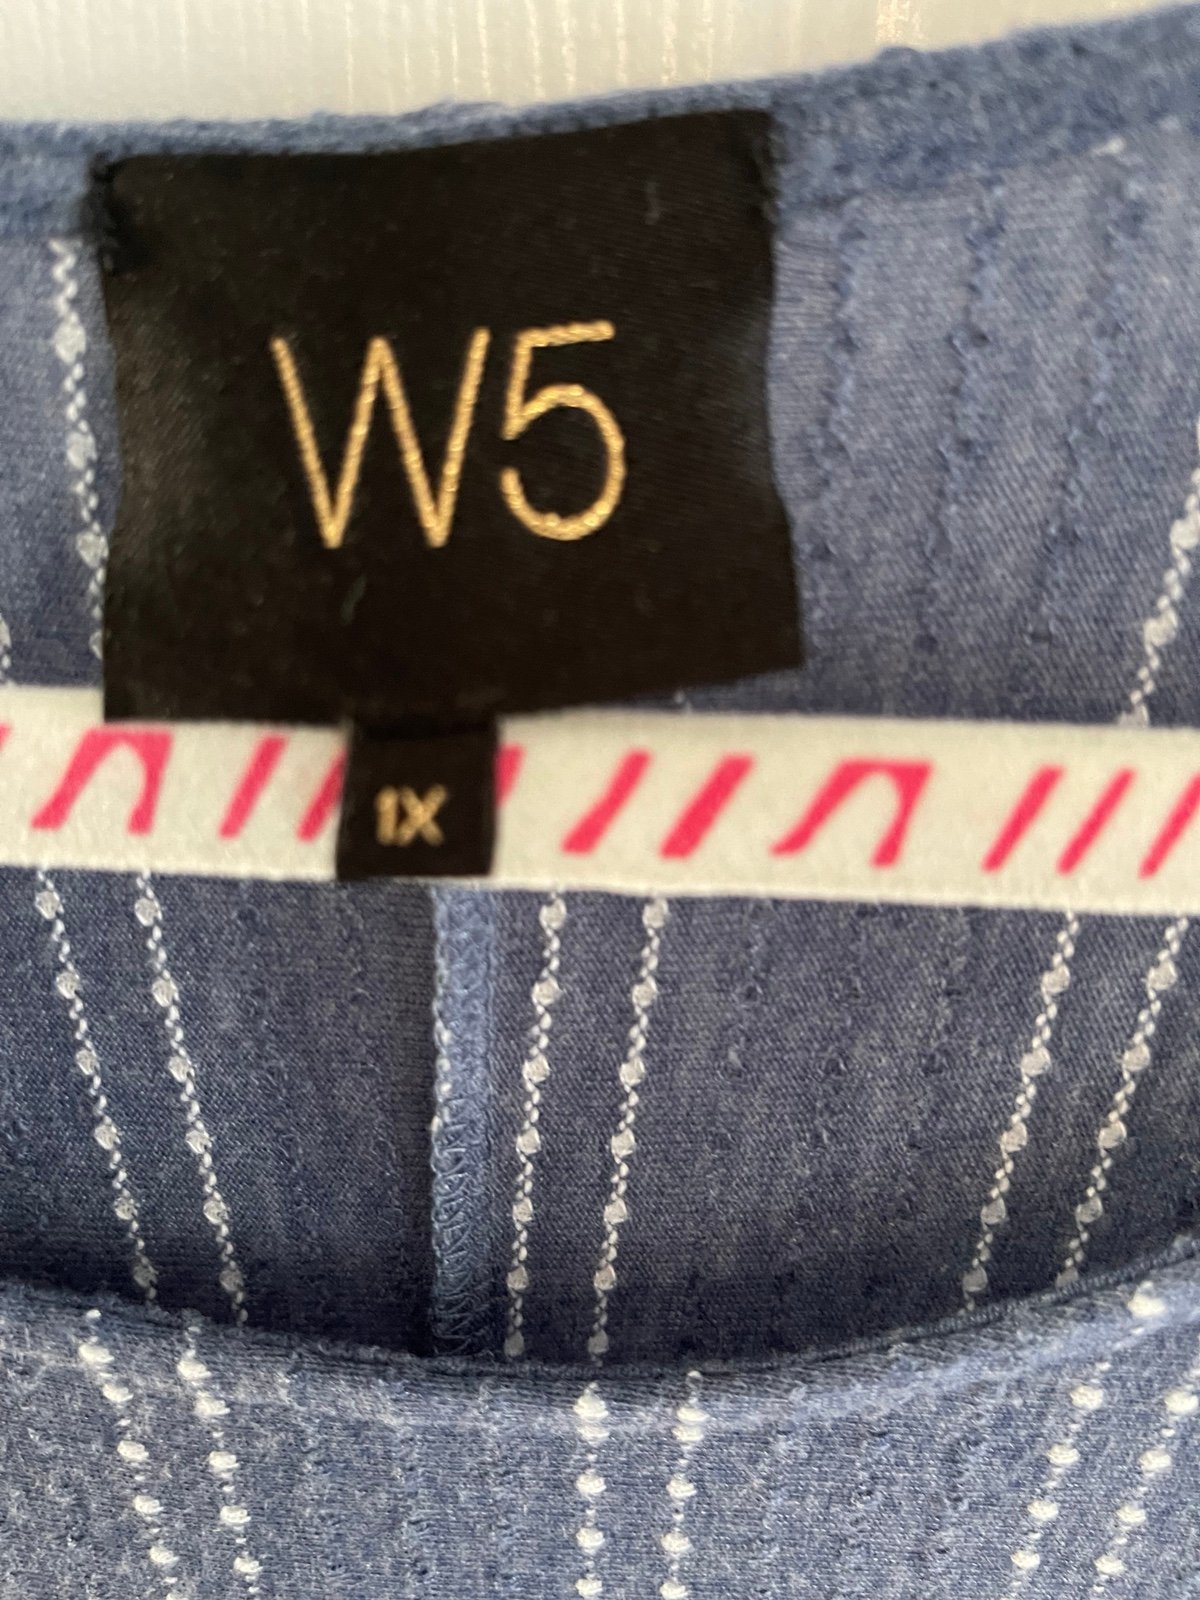 Wholesale price W5 Shirt Women lBlue Asymmetrical 3/4 Sleeve Ruffle Cuff KxTwceEs2 New Style